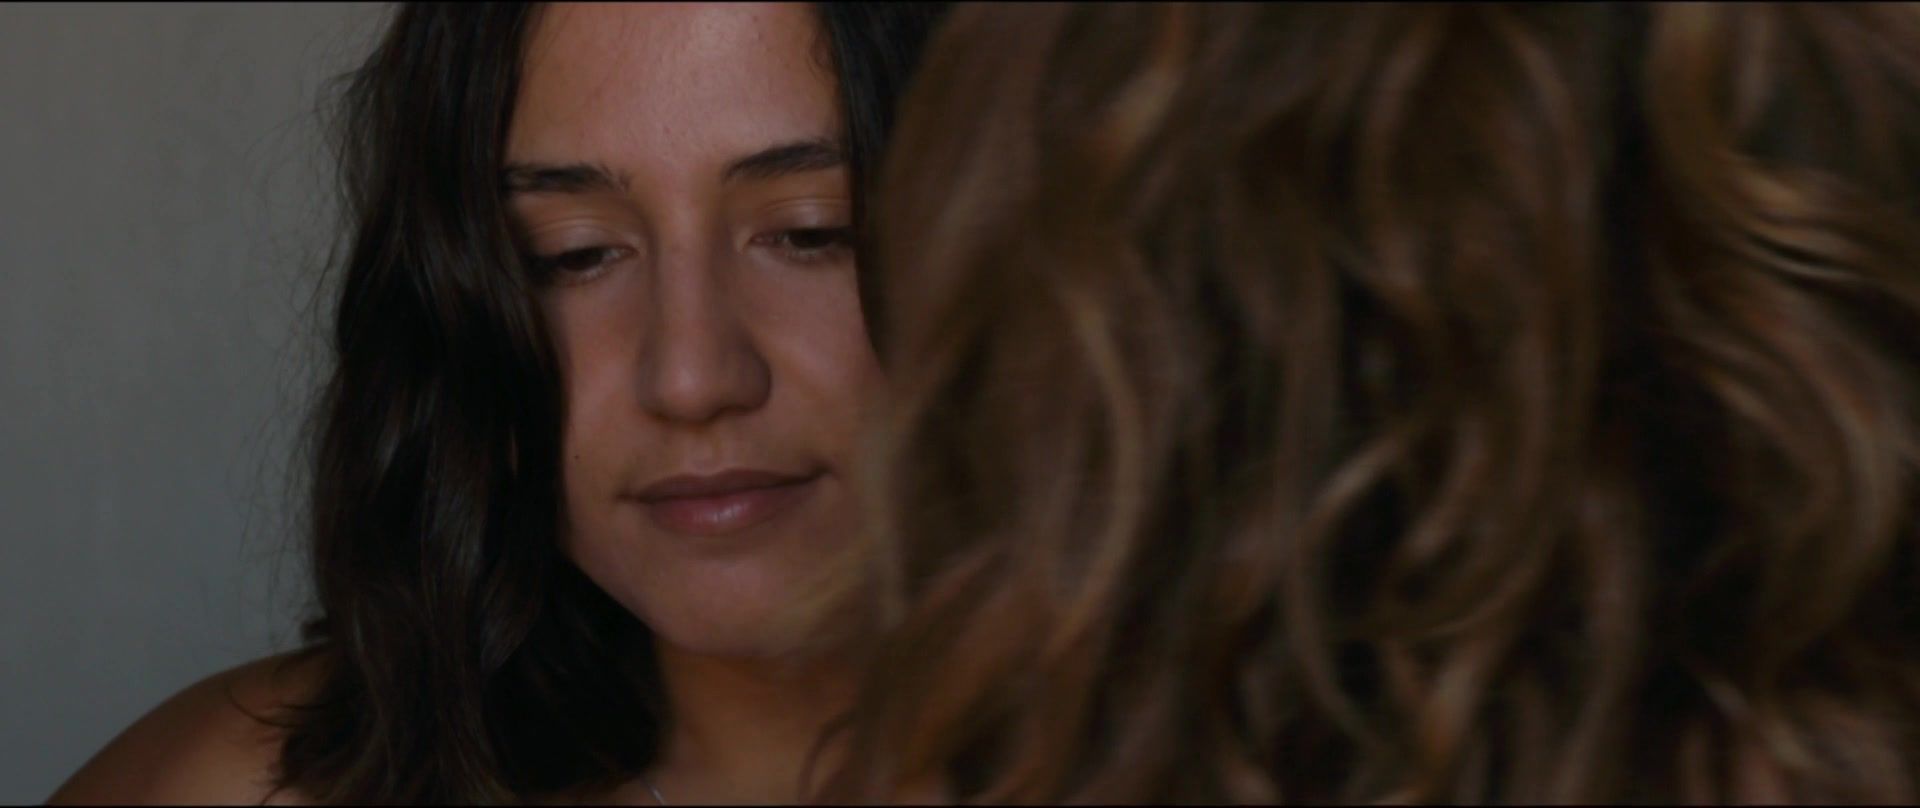 Glory Hole Outdoors Lesbian Sex Video of French erotic film "La belle saison" Novinha - 2